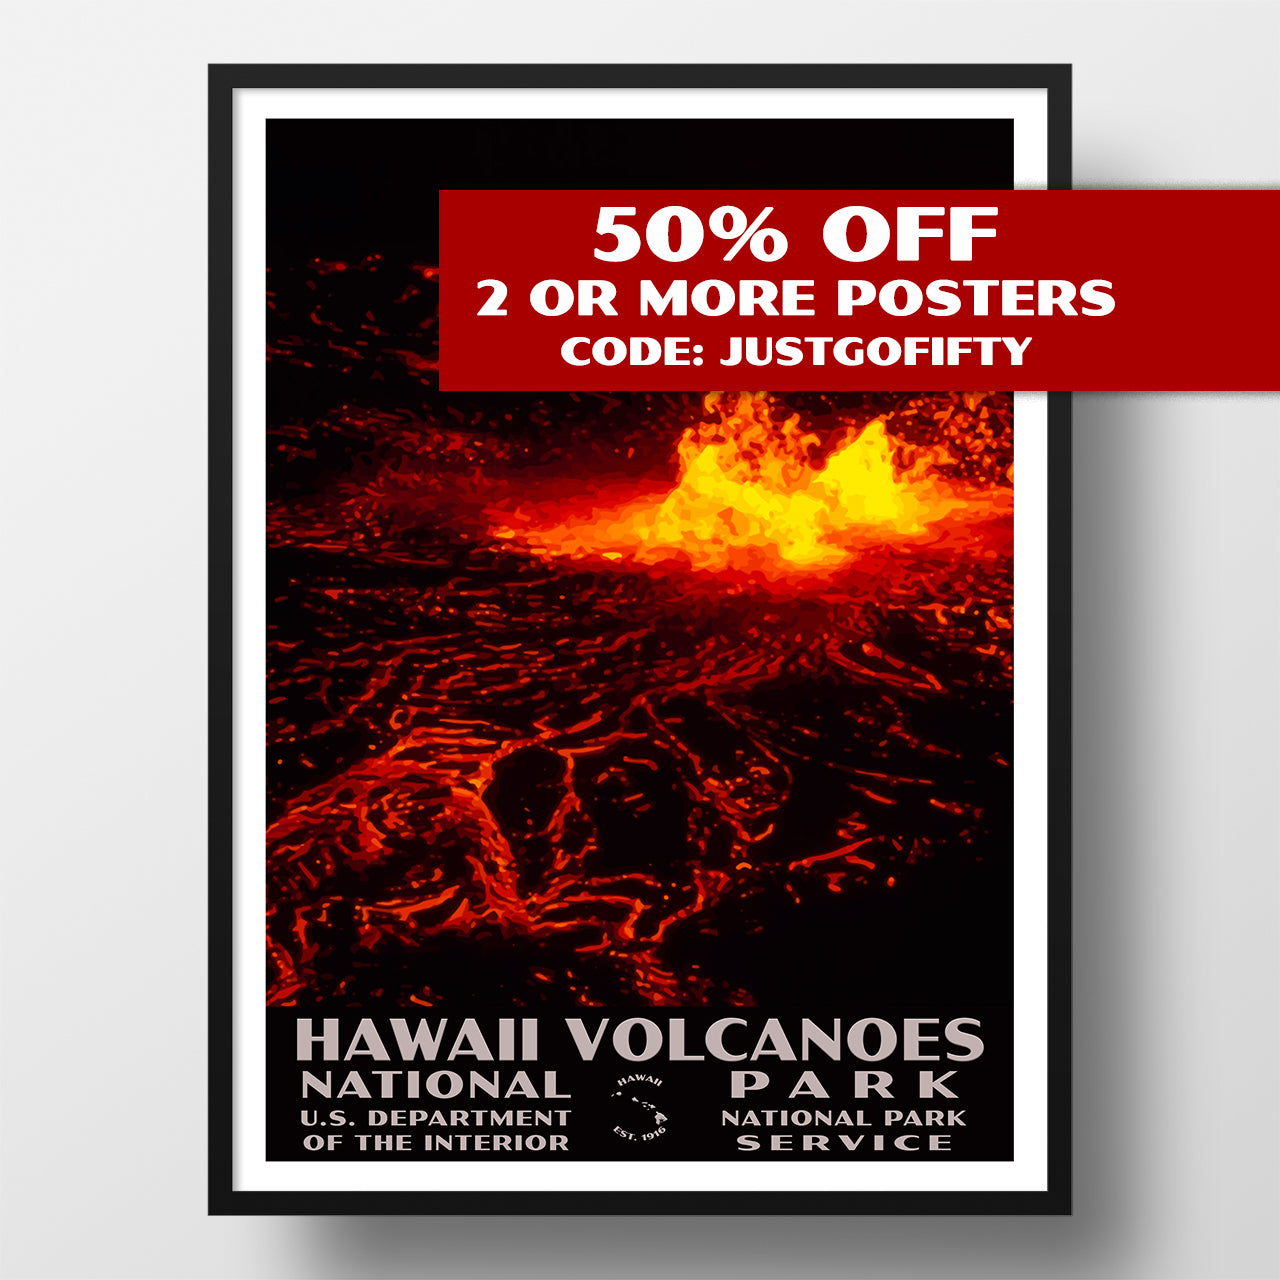 Hawaii Volcanoes National Park poster